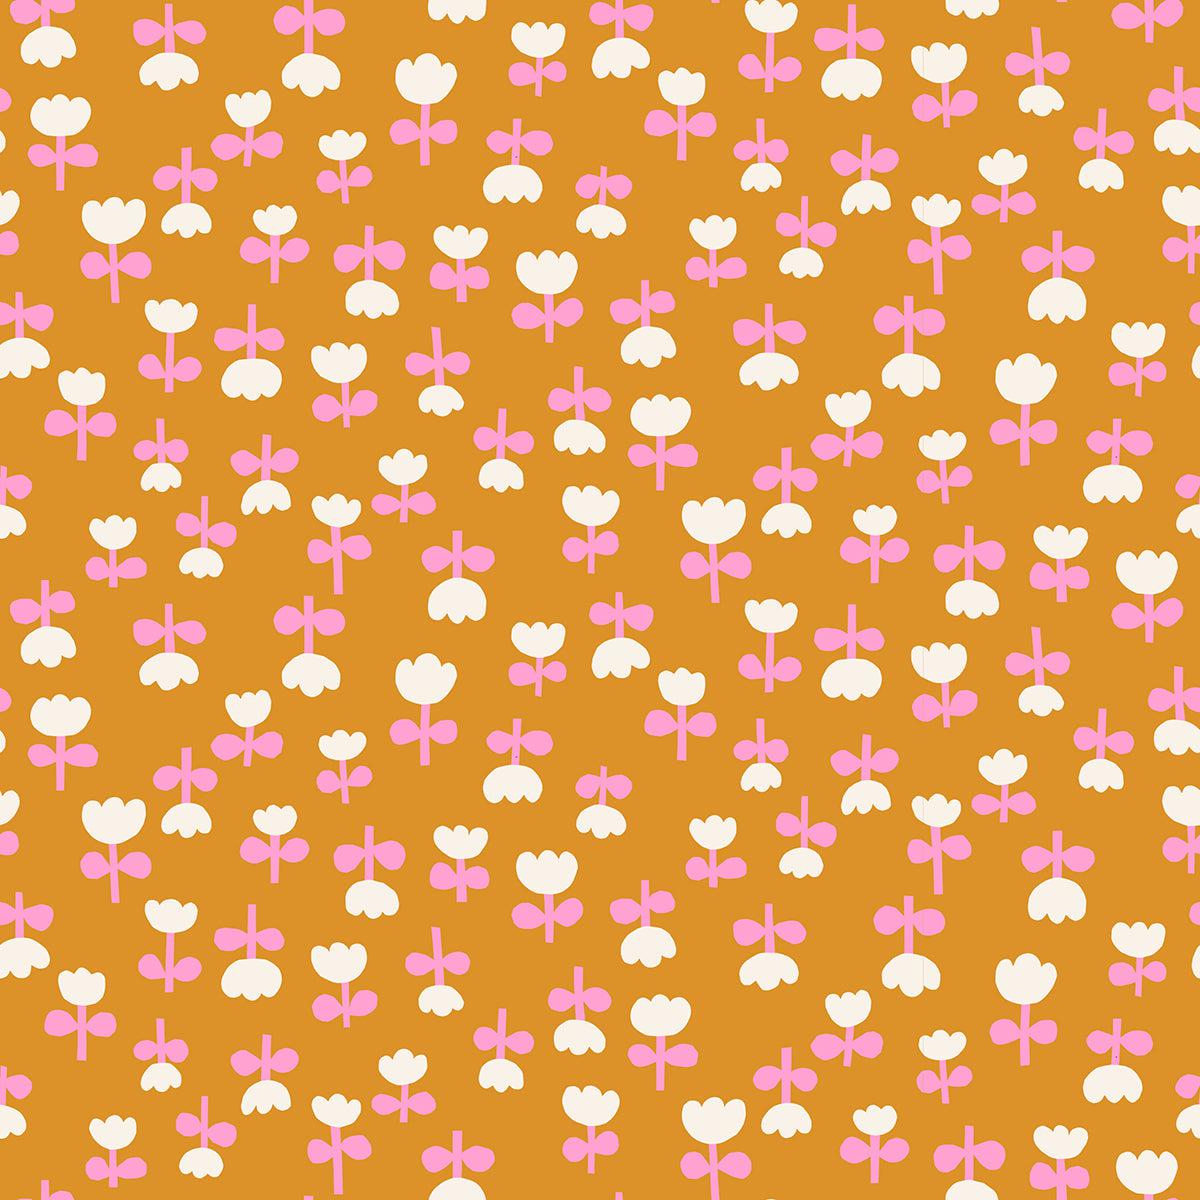 Ruby Star Society-Tulips Honey-fabric-gather here online